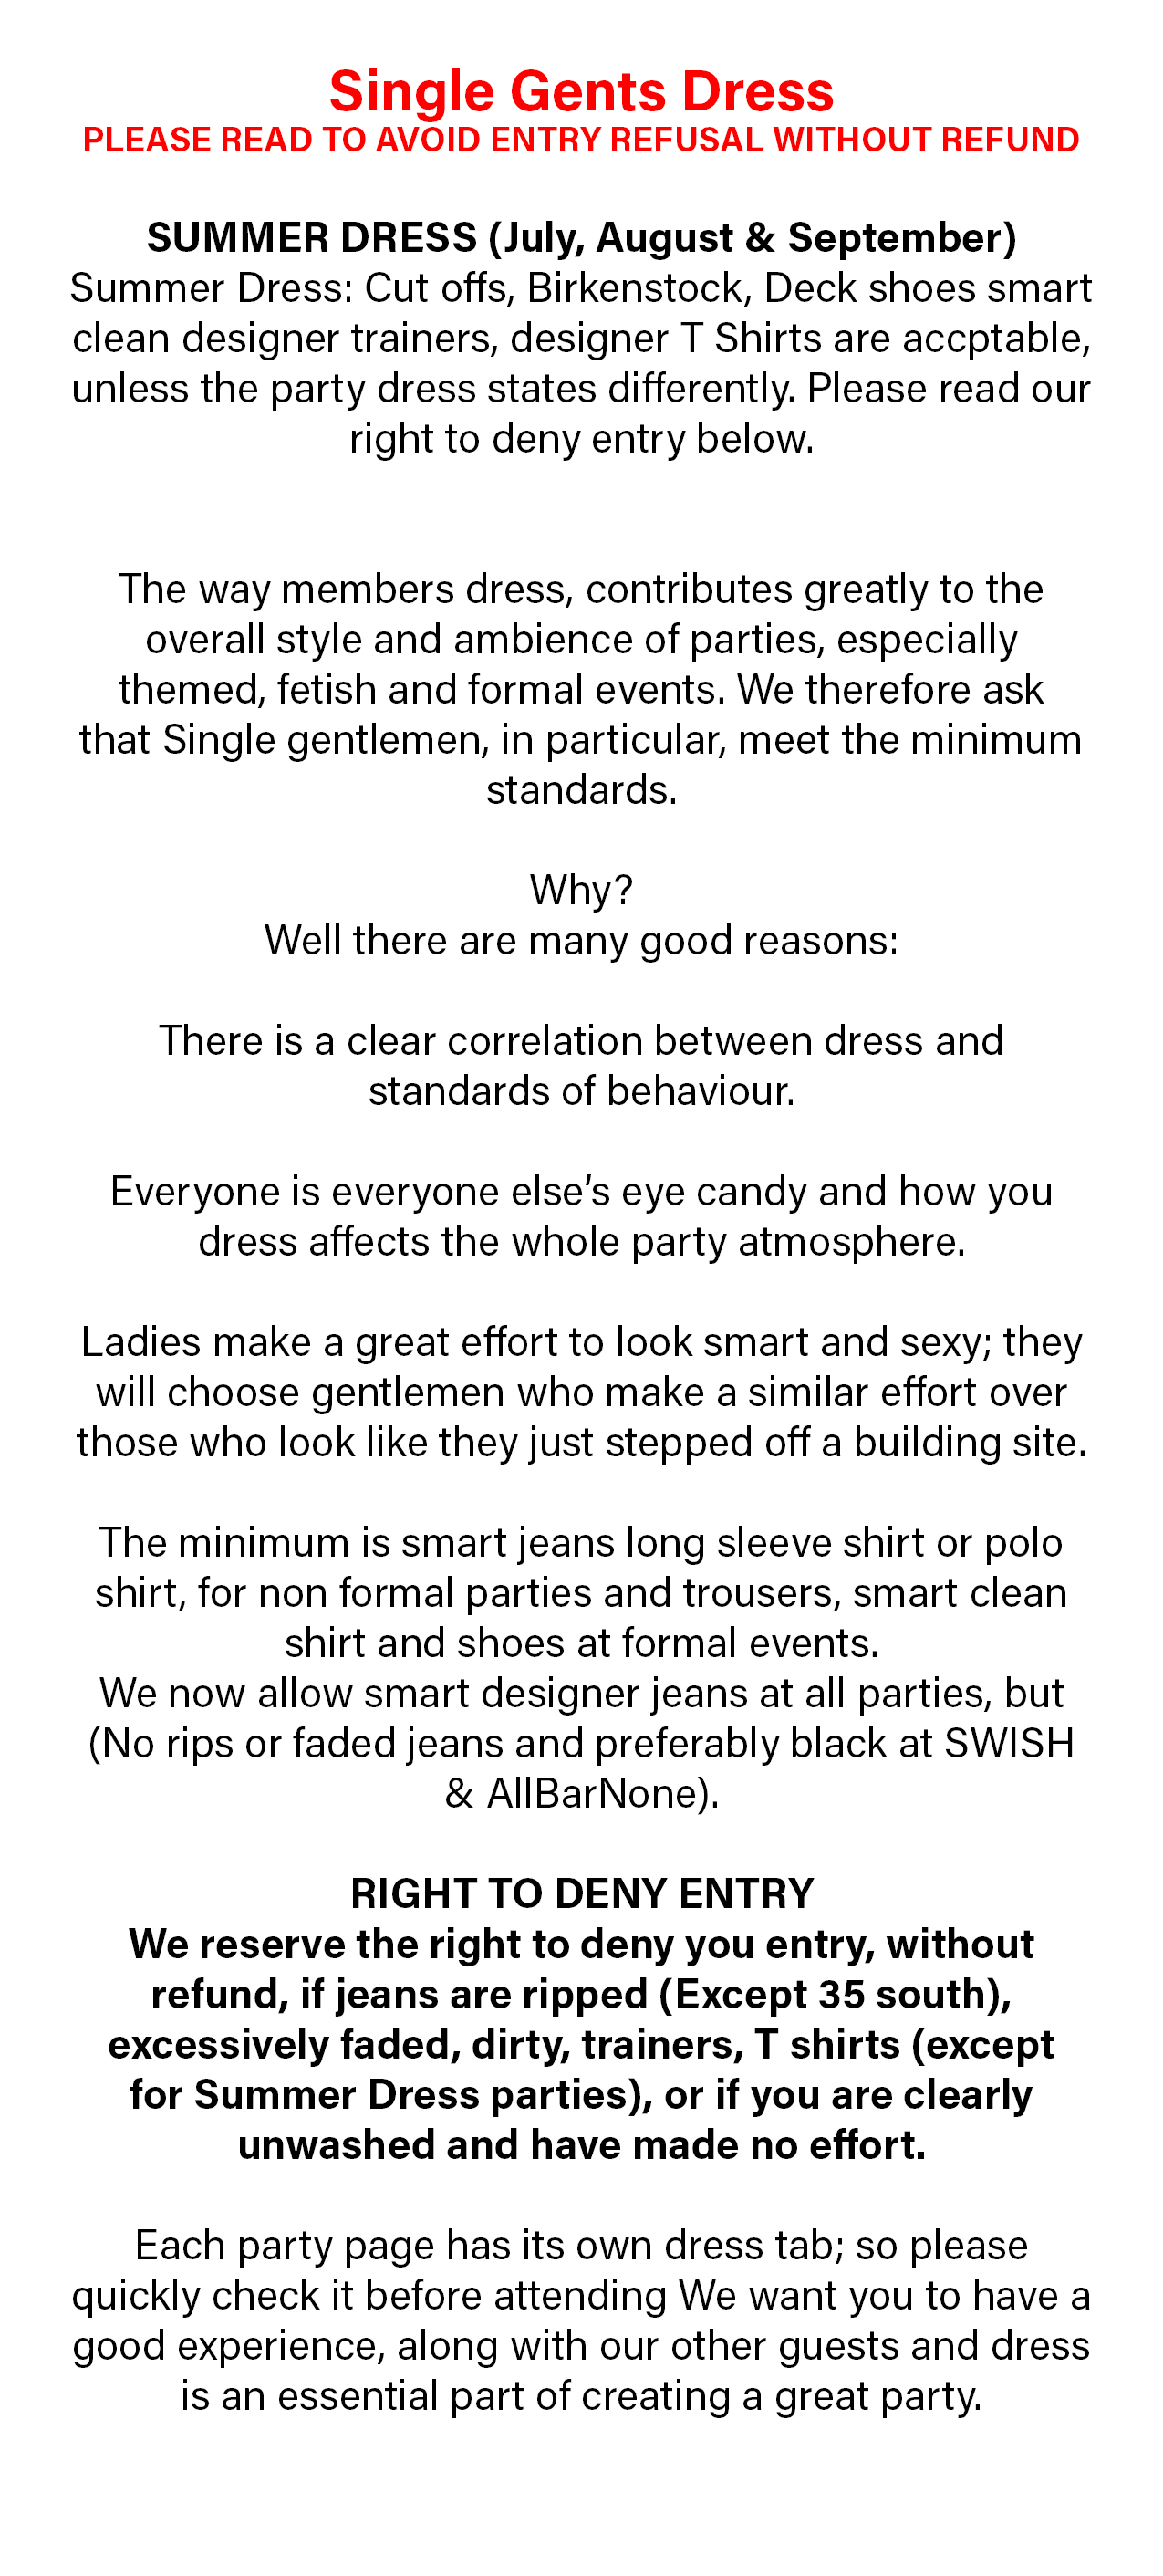 Single Gents Dress standards